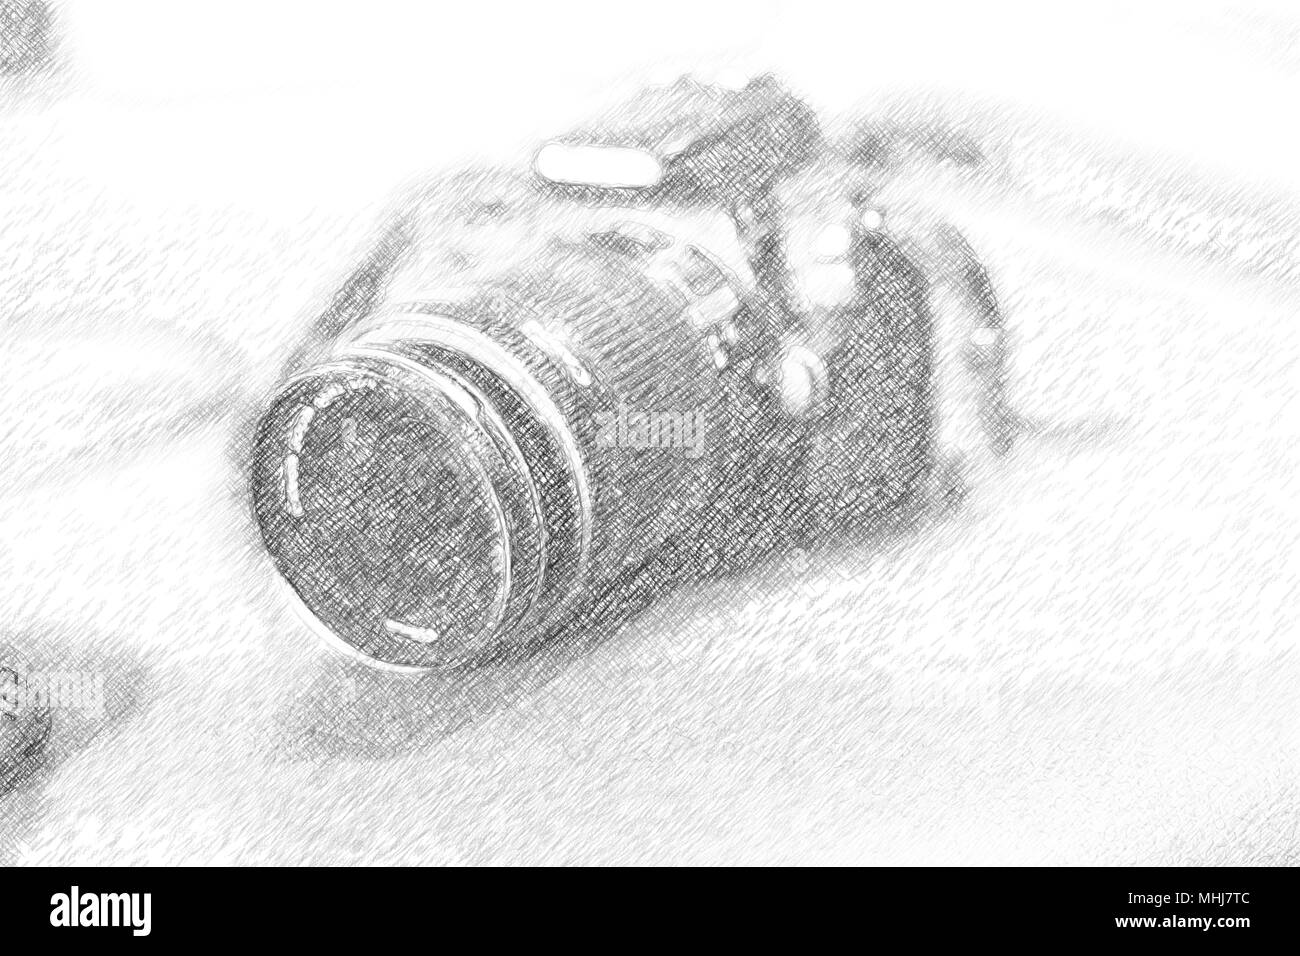 15569 Digital Camera Sketch Images Stock Photos  Vectors  Shutterstock